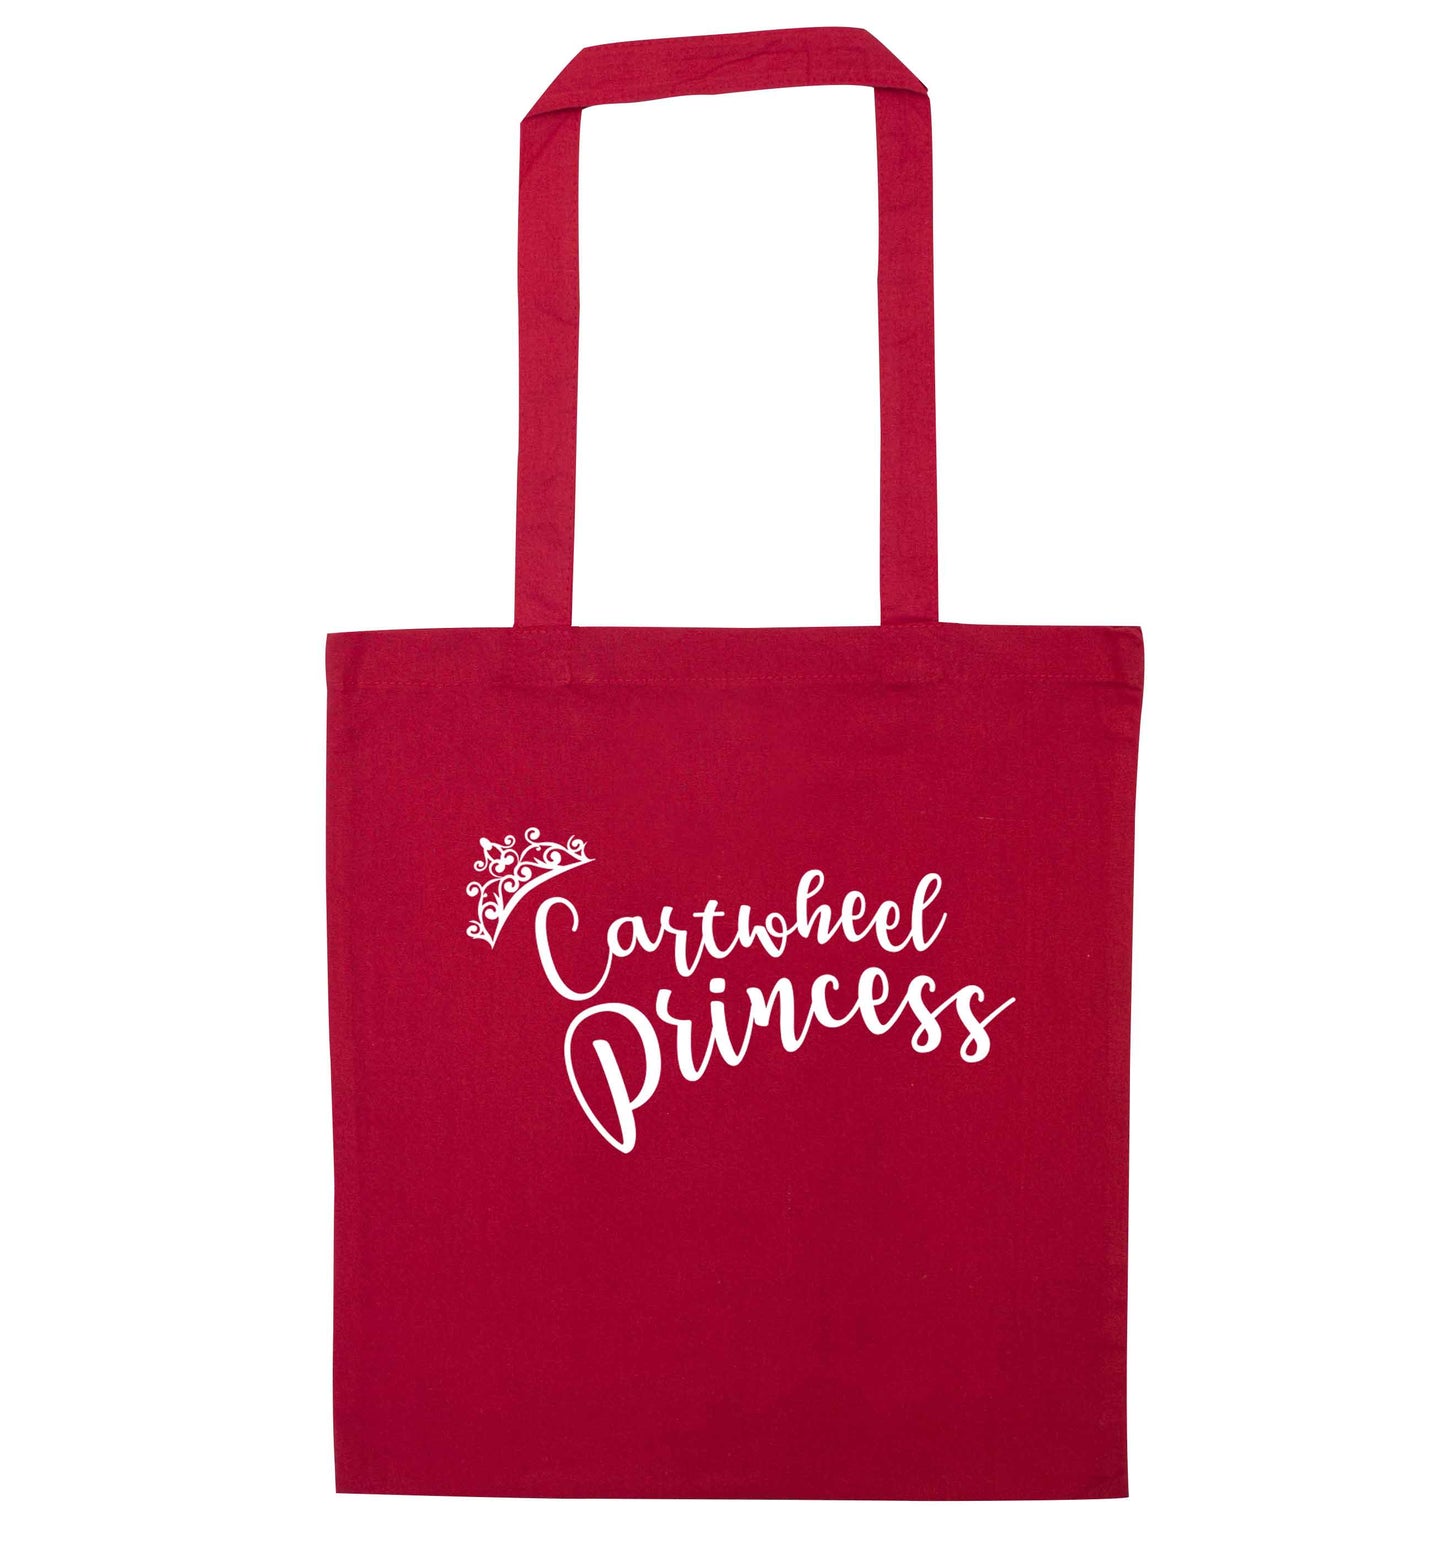 Cartwheel princess red tote bag